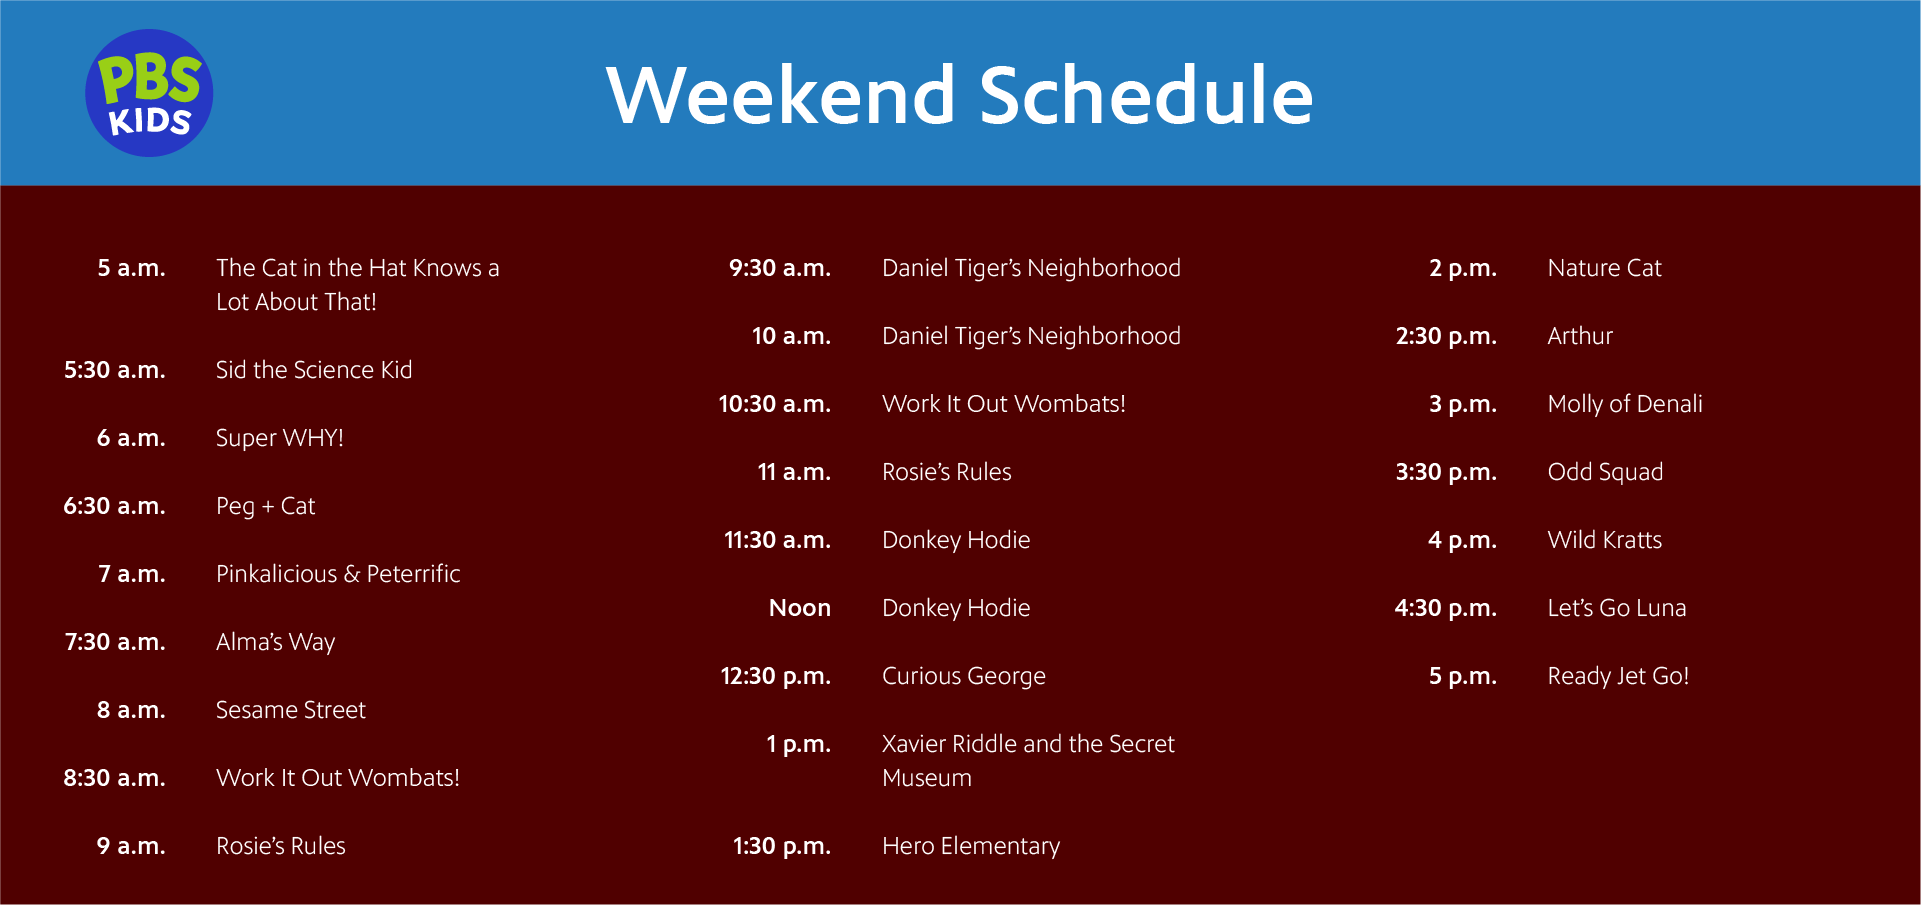 the PBS Kids Weekend Schedule showing the changes written below.